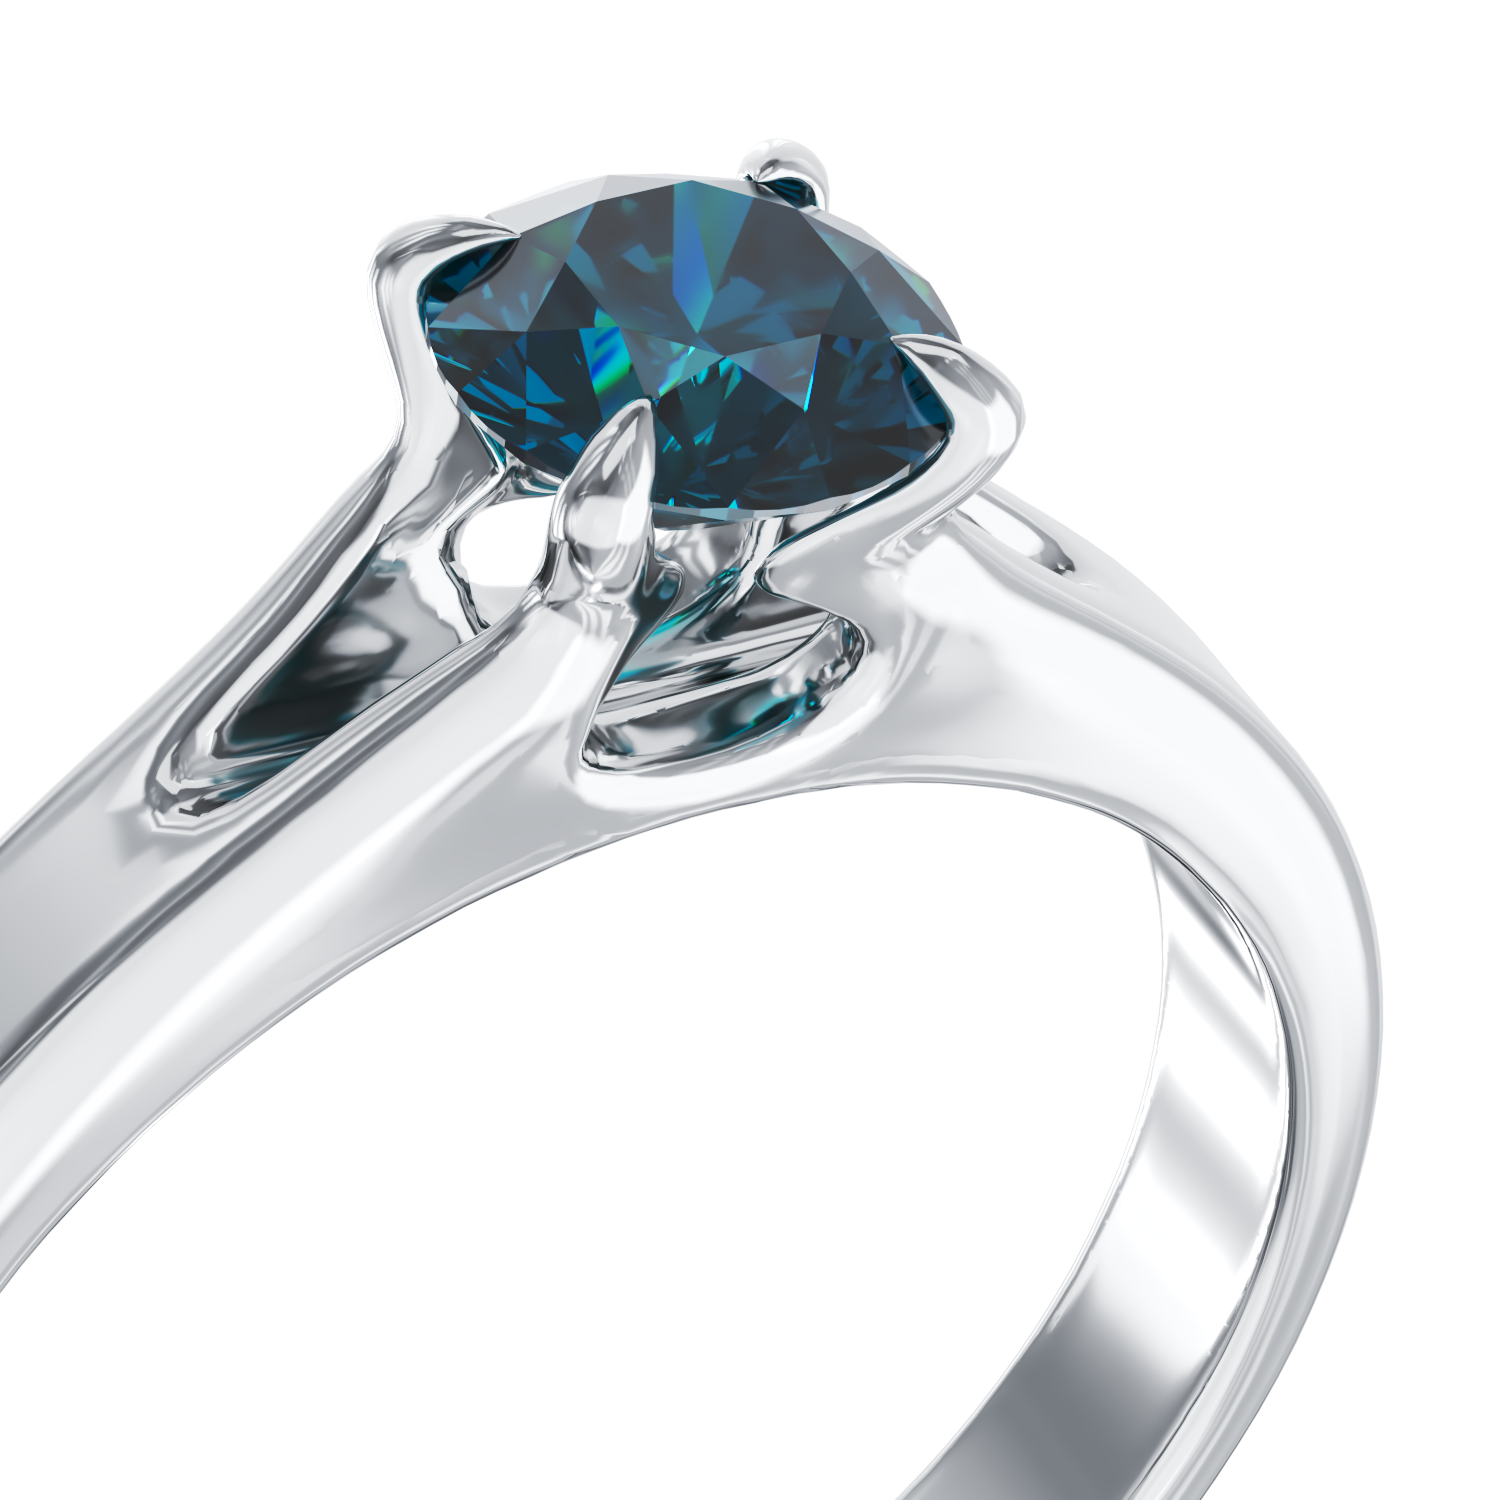 Poze Inel de logodna din aur alb de 18K cu un diamant solitaire albastru de 0.55ct